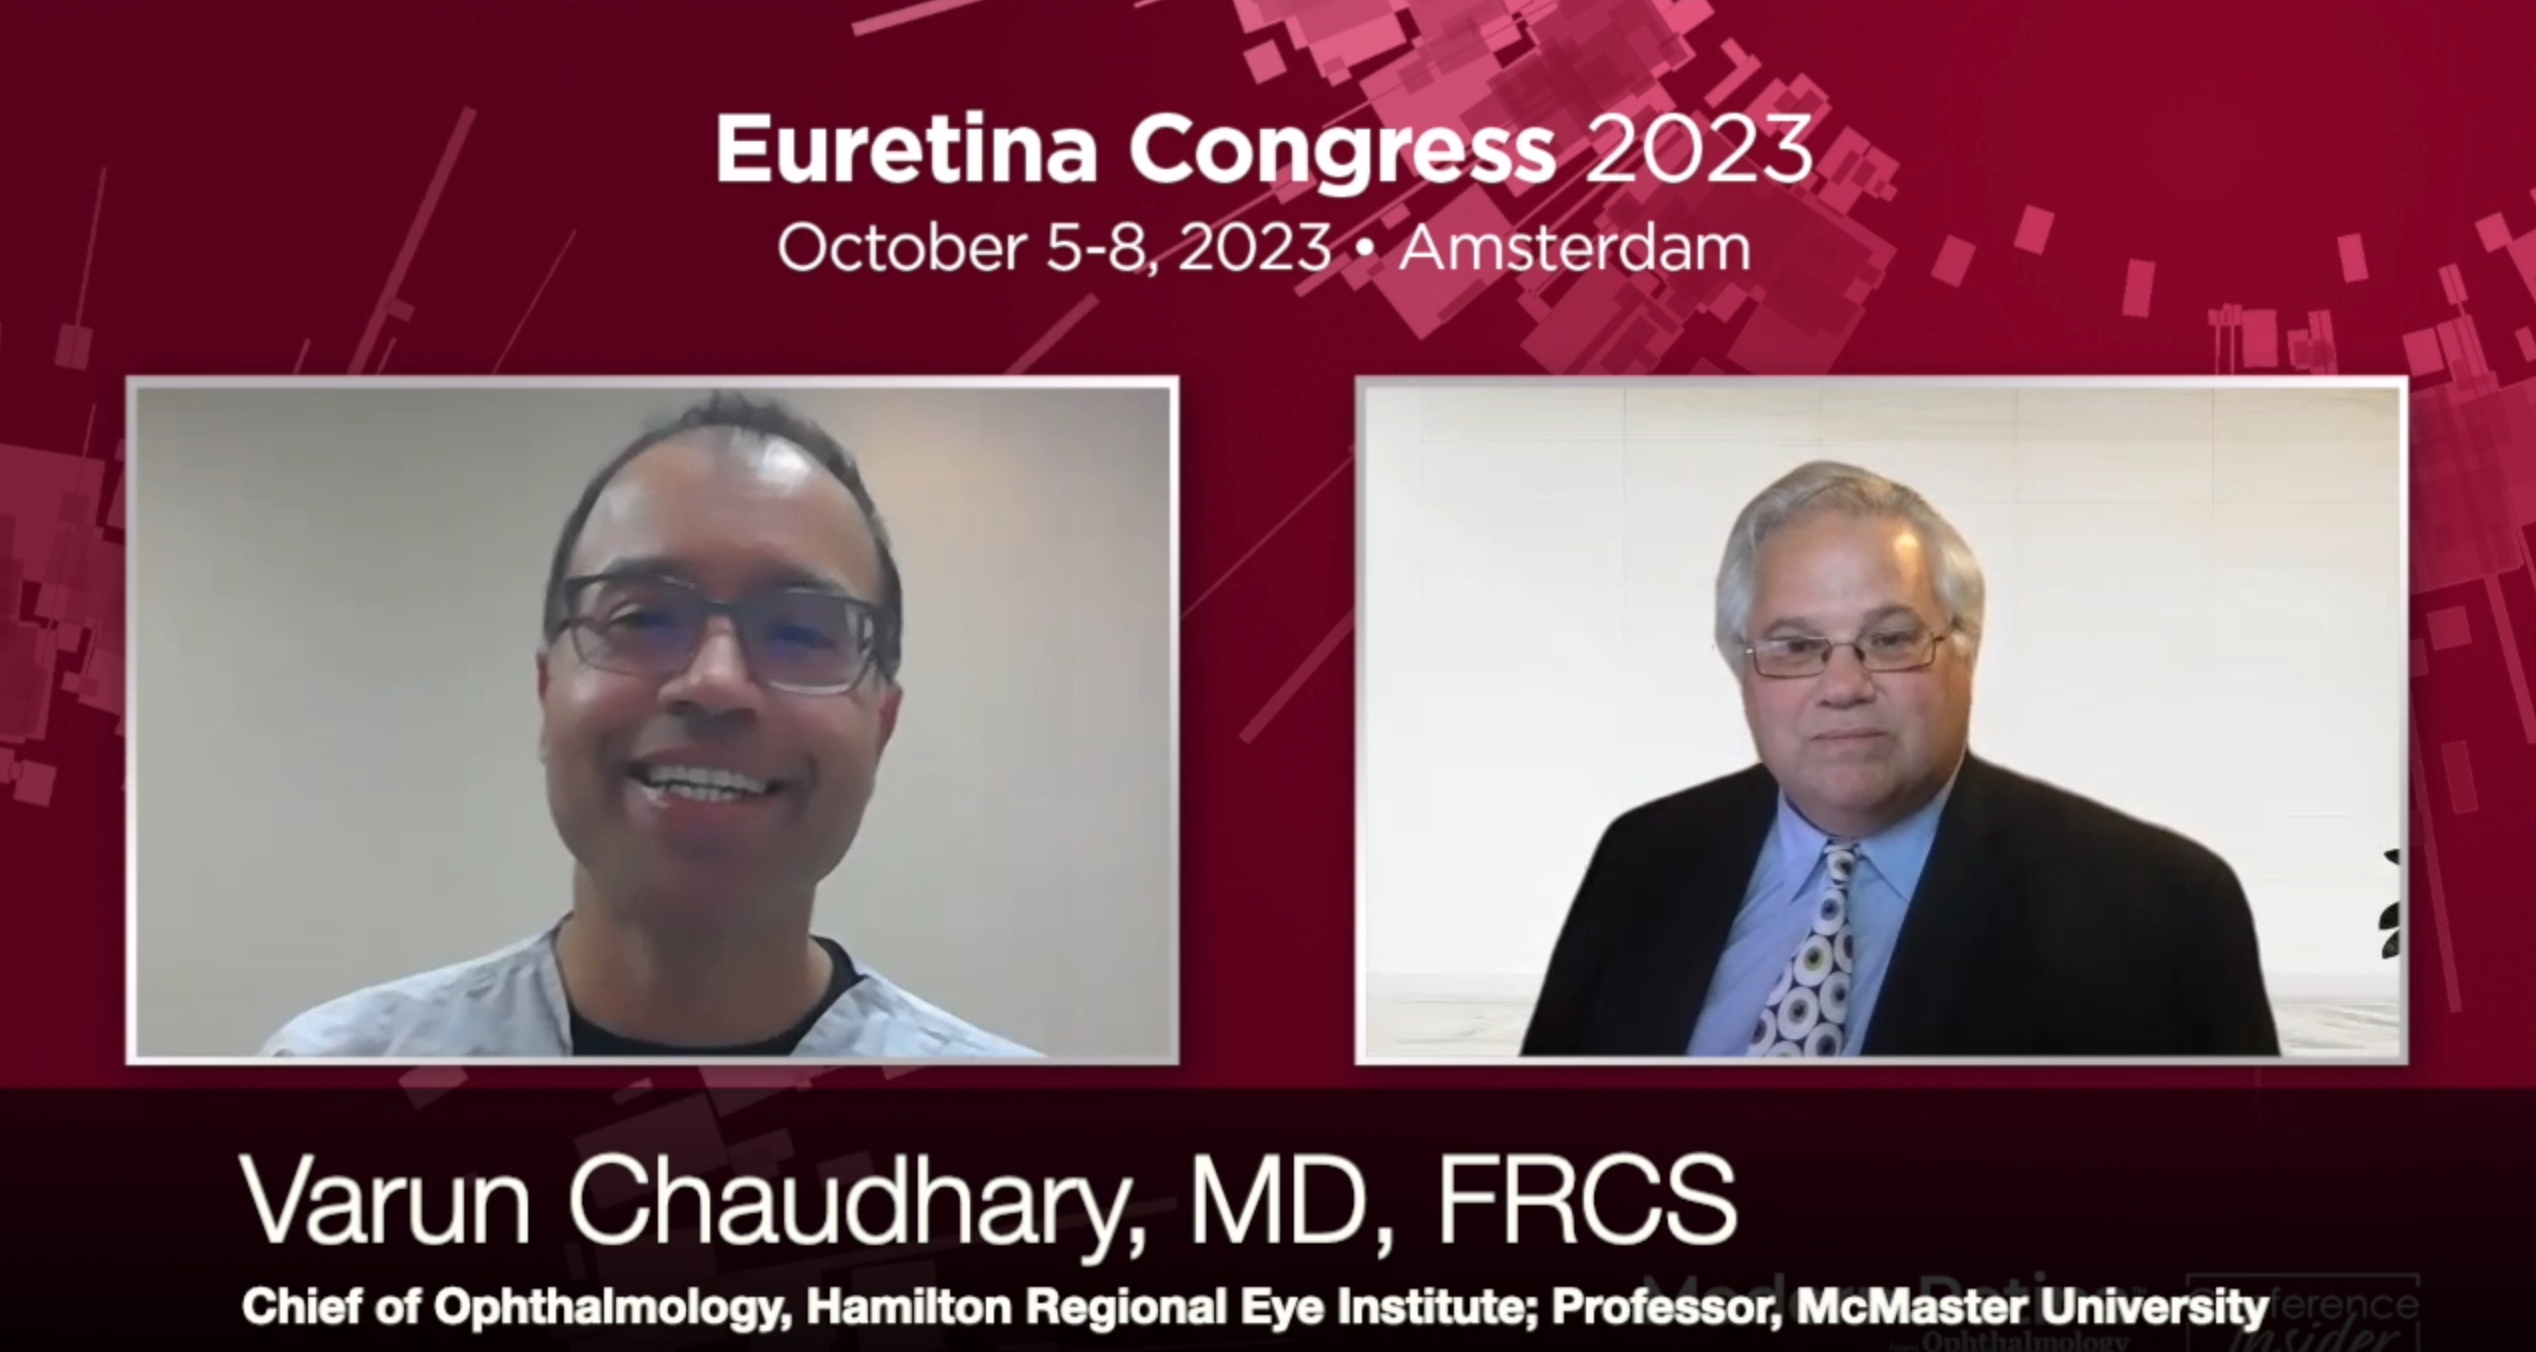 EURETINA 2023: Varun Chaudhary, MD, discusses posturing after macular hole surgery